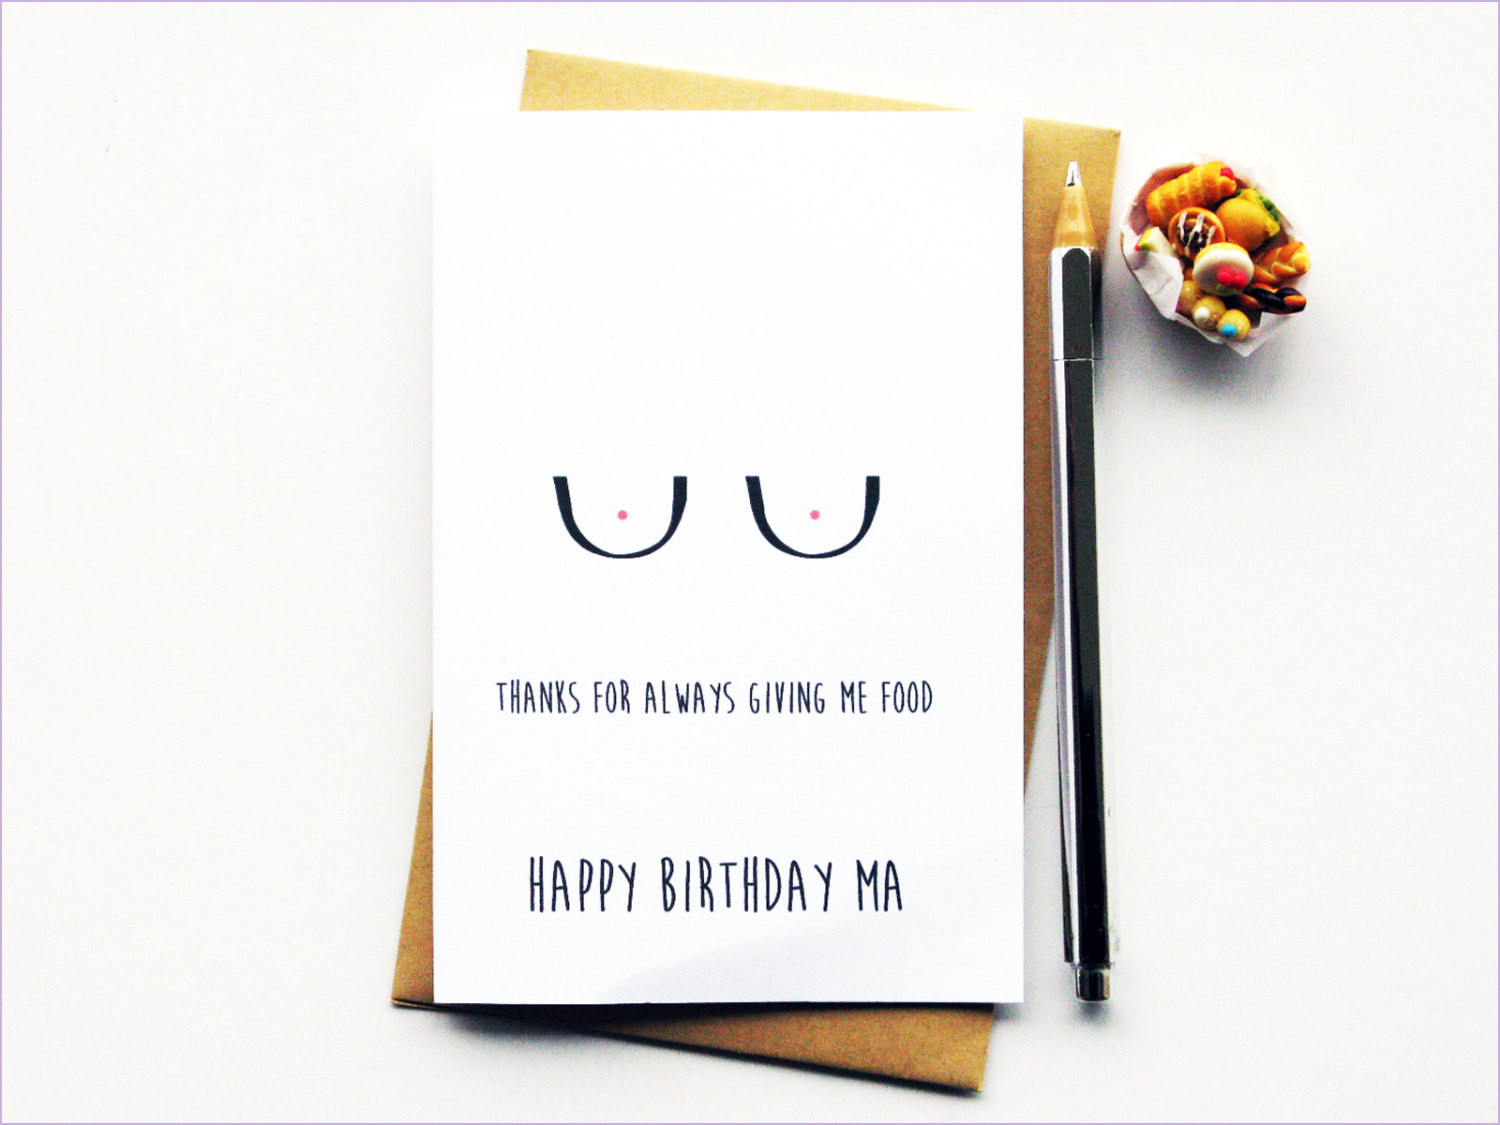 Funny Birthday Cards Ideas 98 Birthday Card For Your Mom Happy Birthday Mom Card Ideas For A